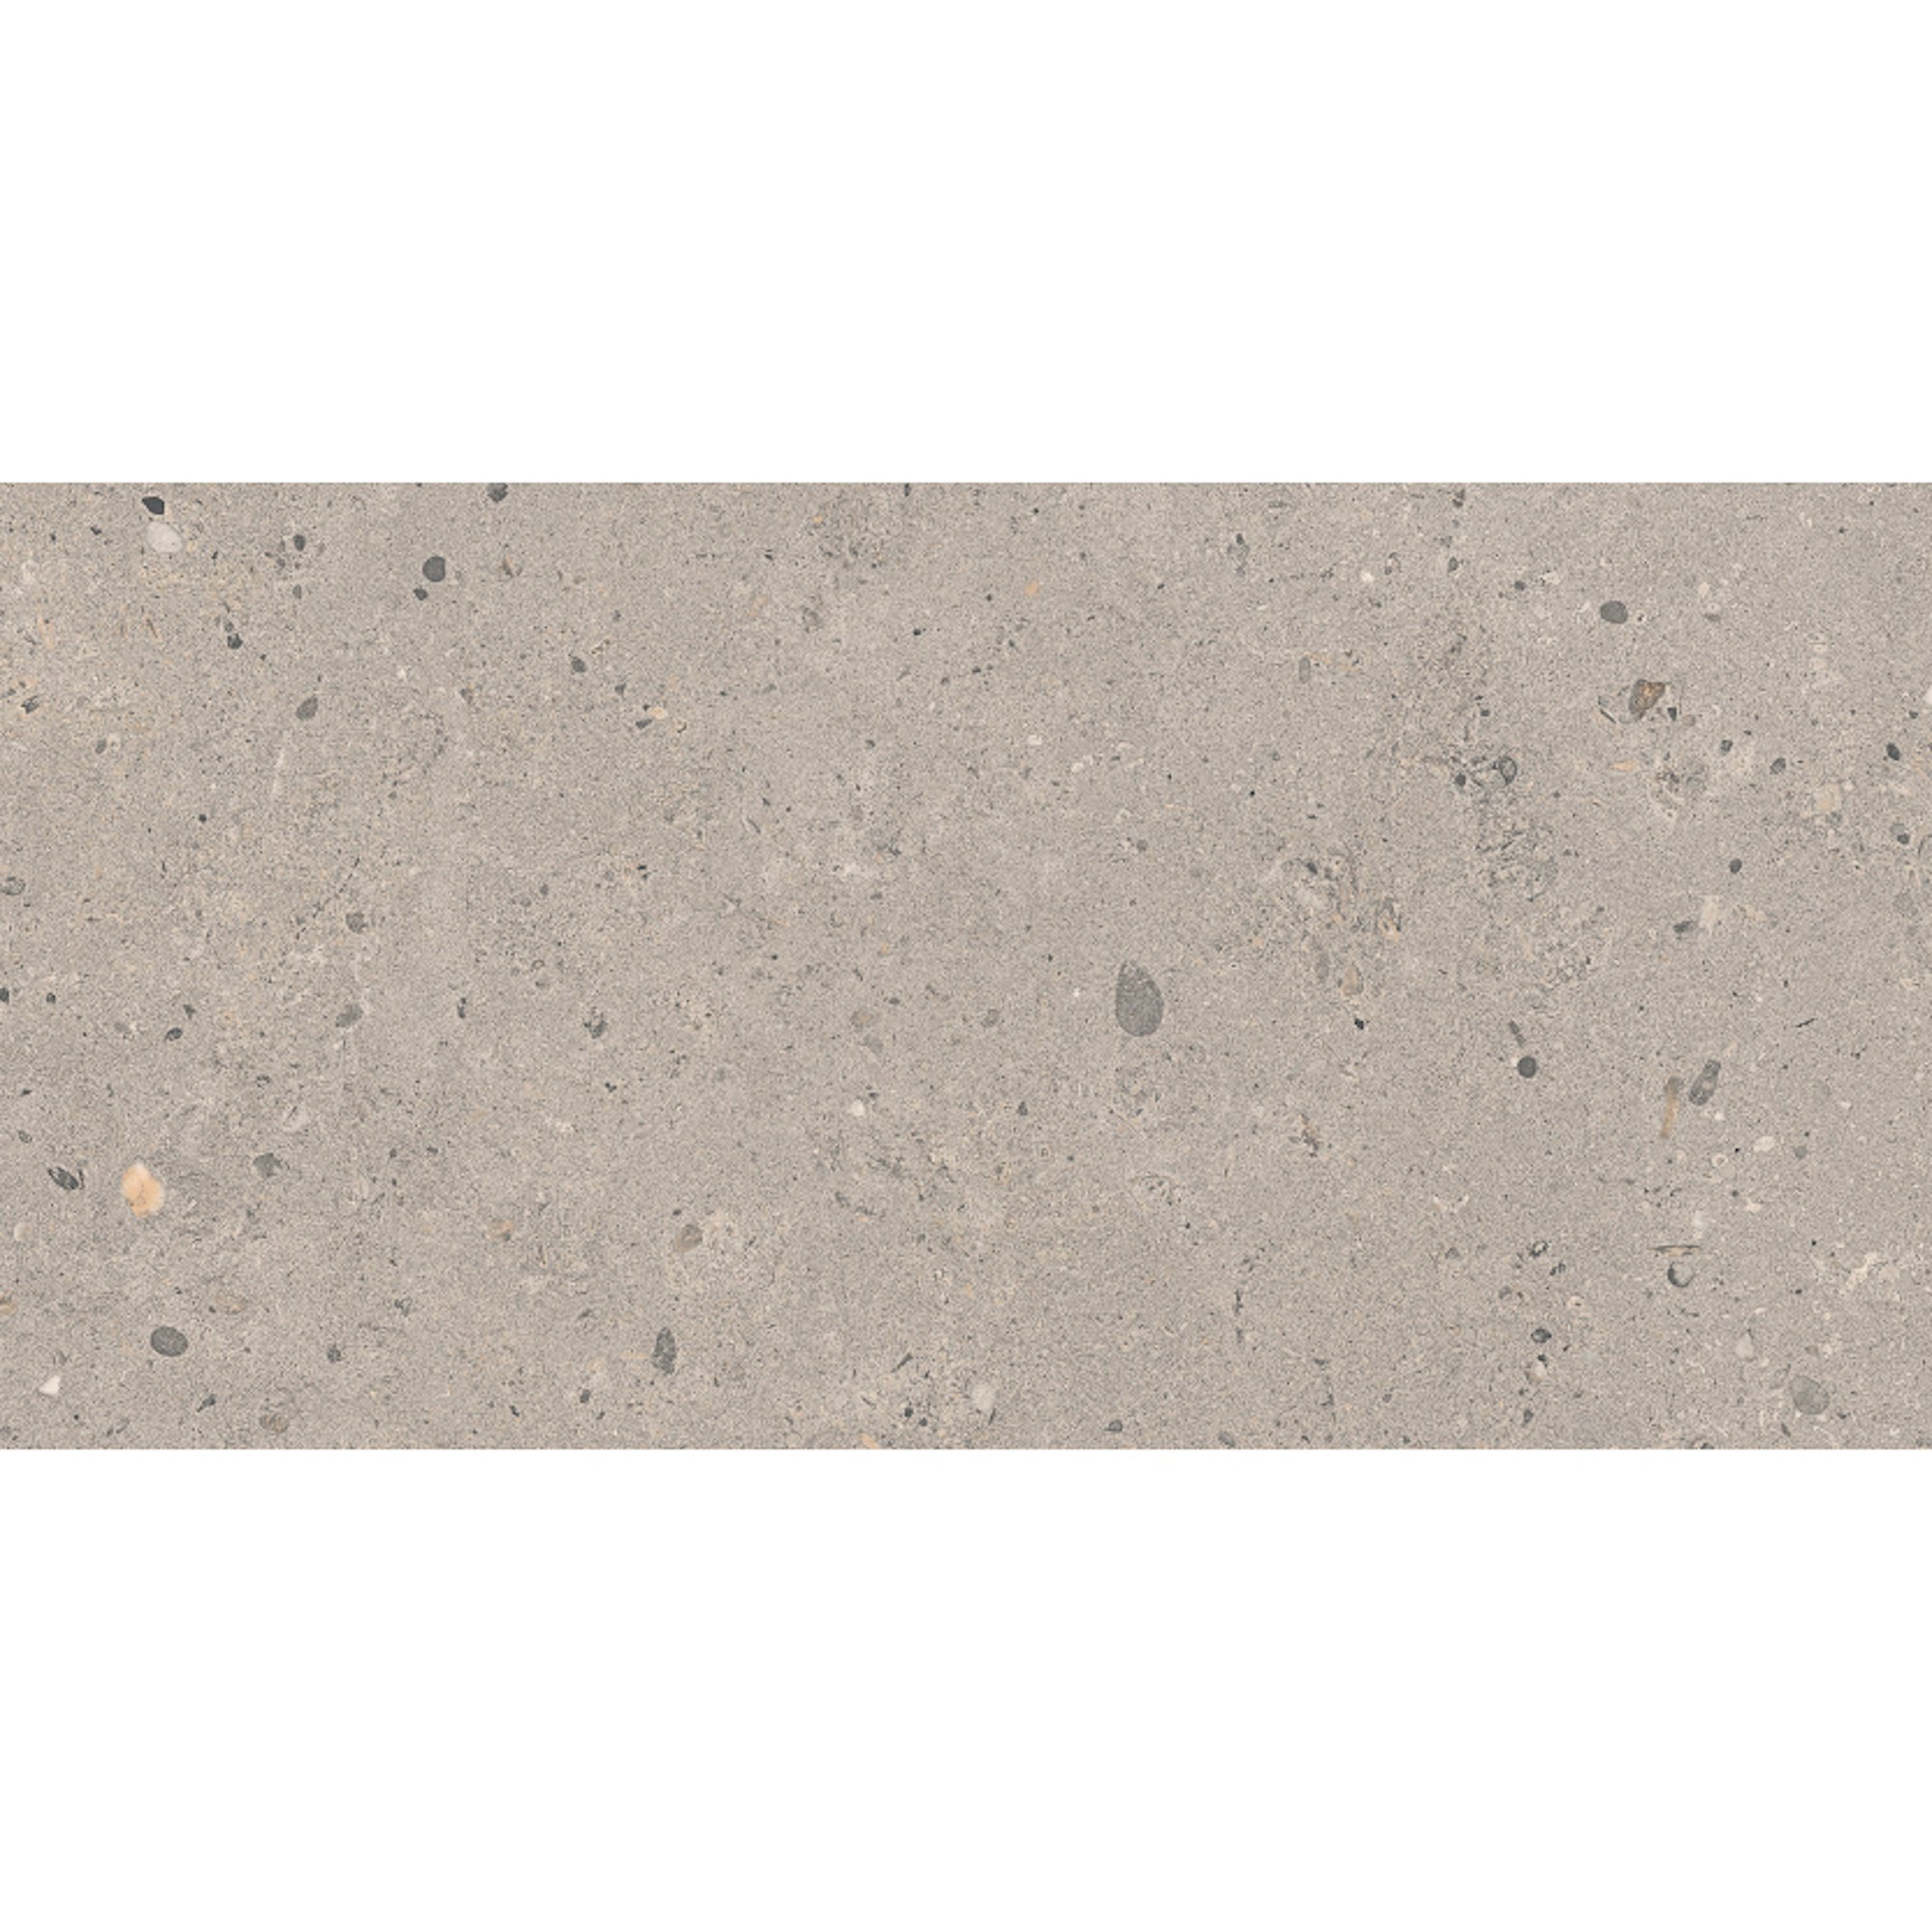 Coolstone Grey 600x300mm tile